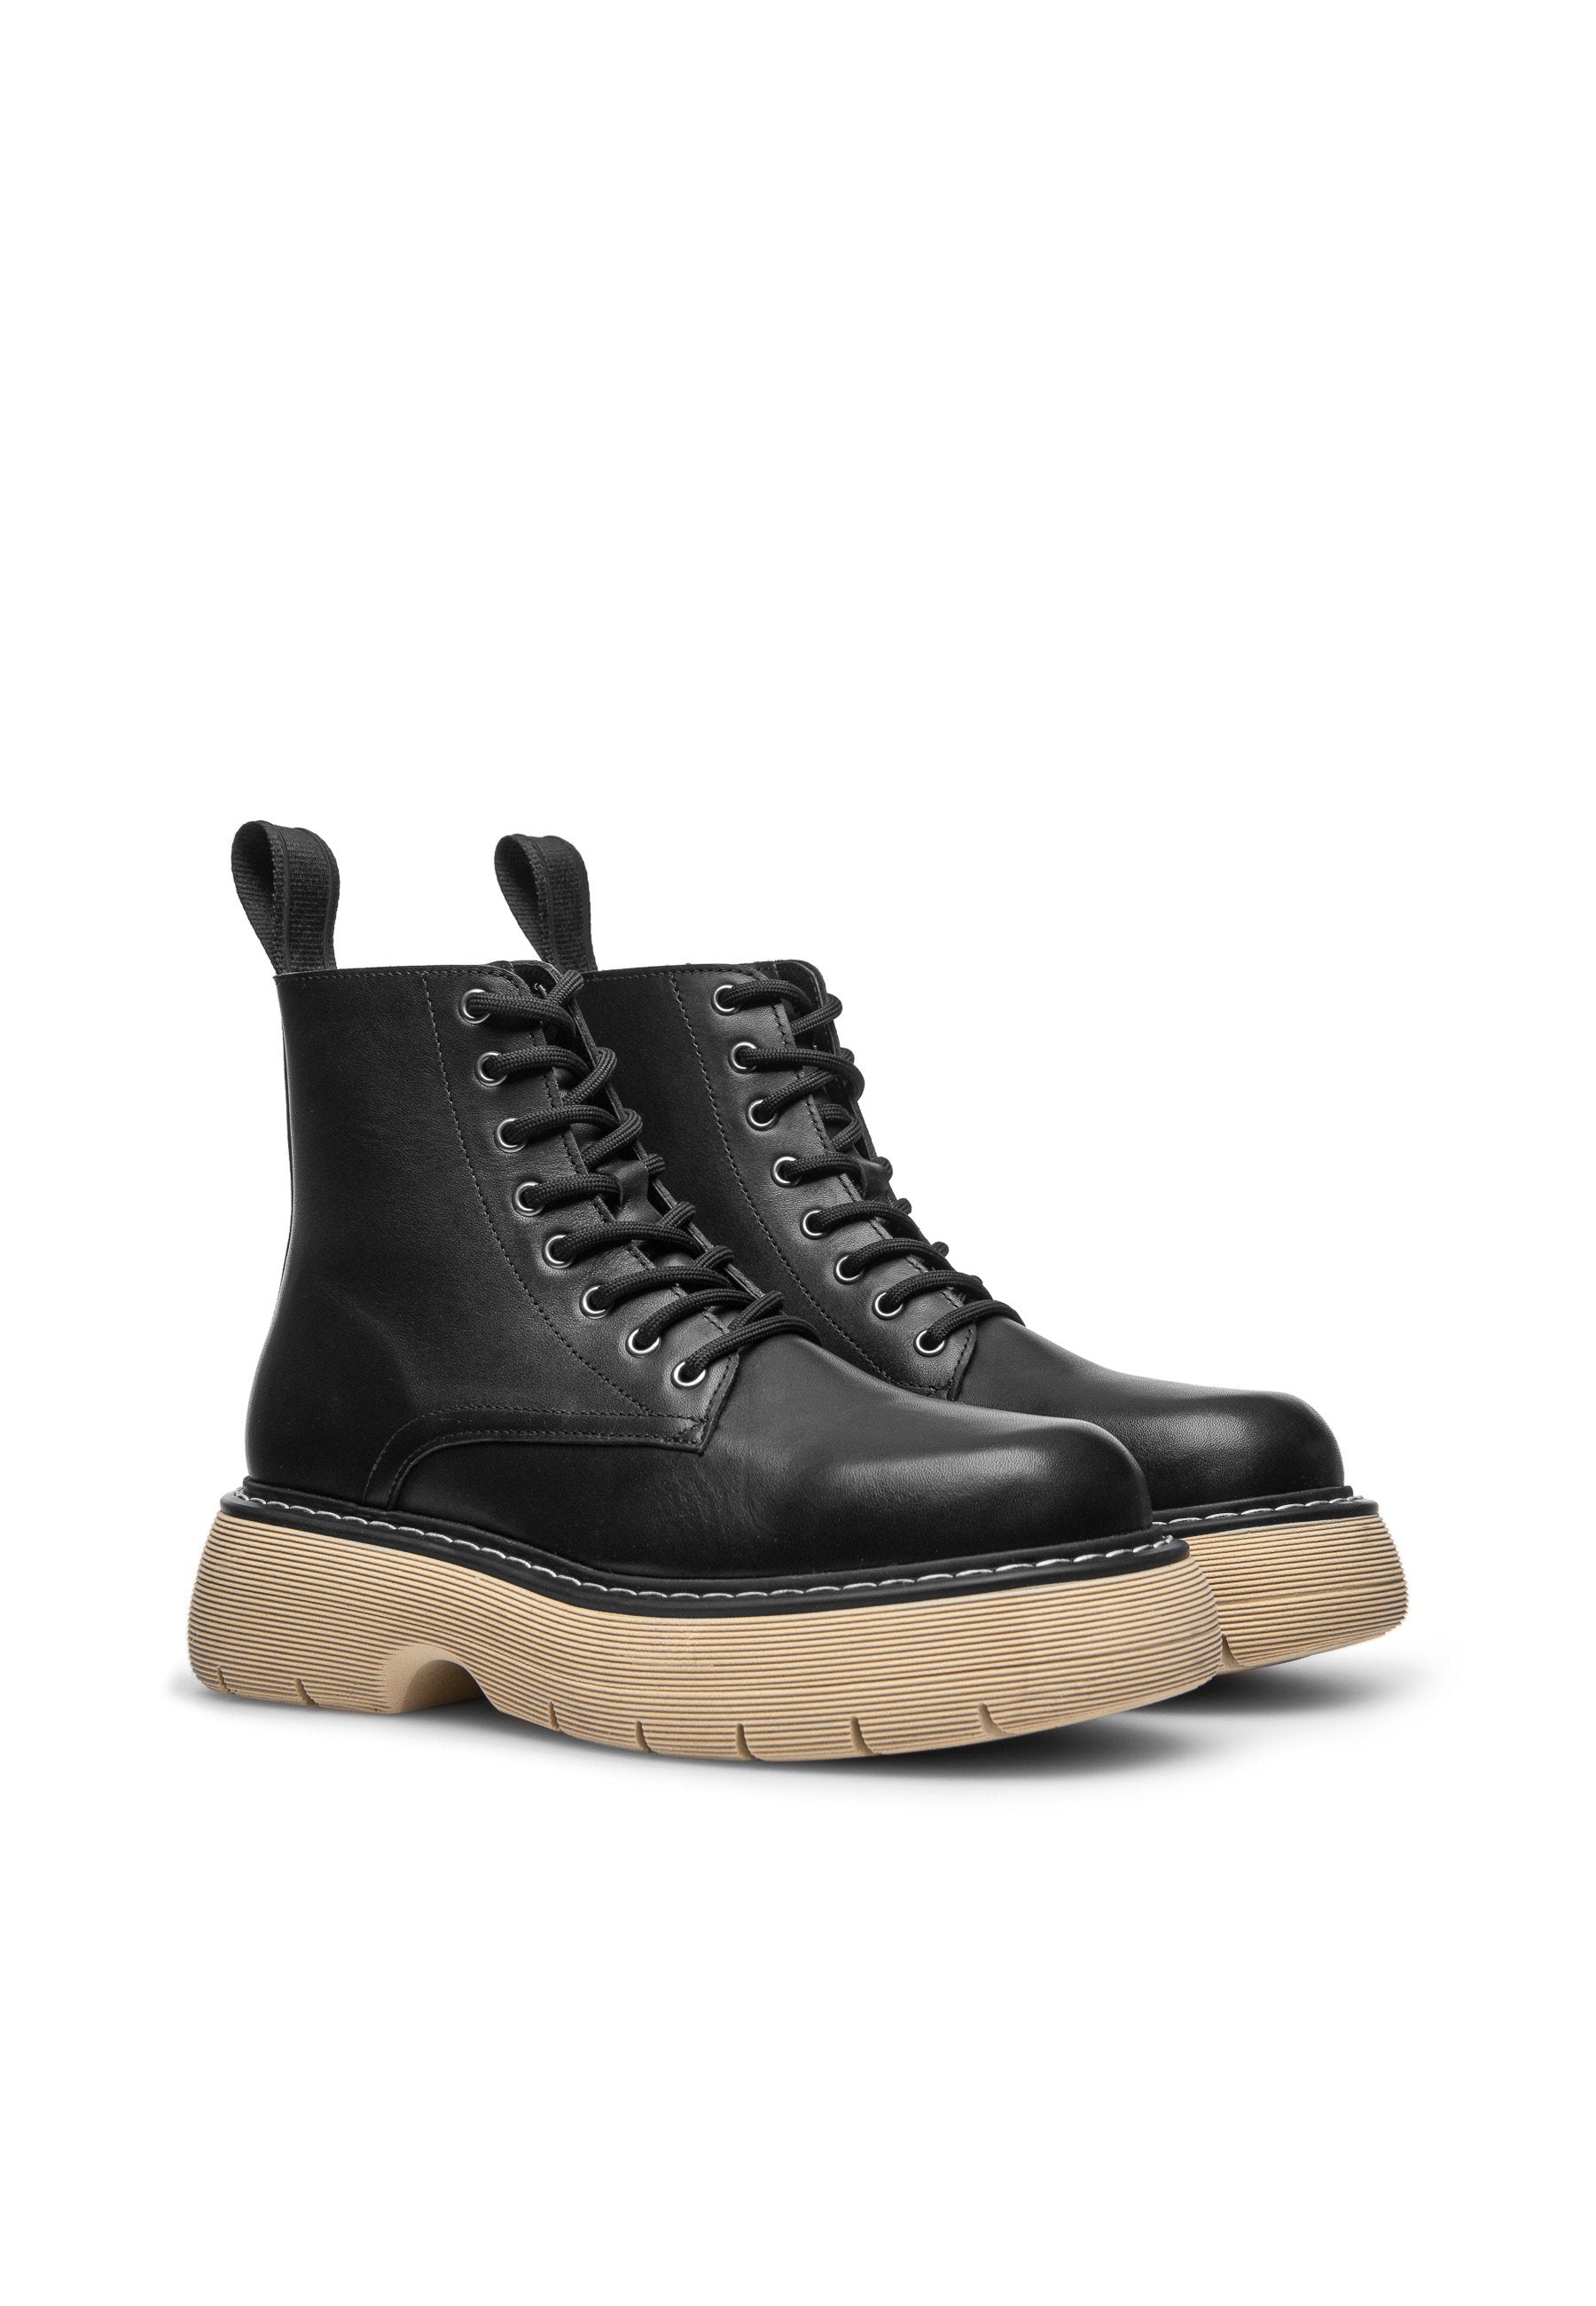 Jane Black Leather Combat Boots LAST1482 - 04Jane Black Leather Combat Boots LAST1482 - 06